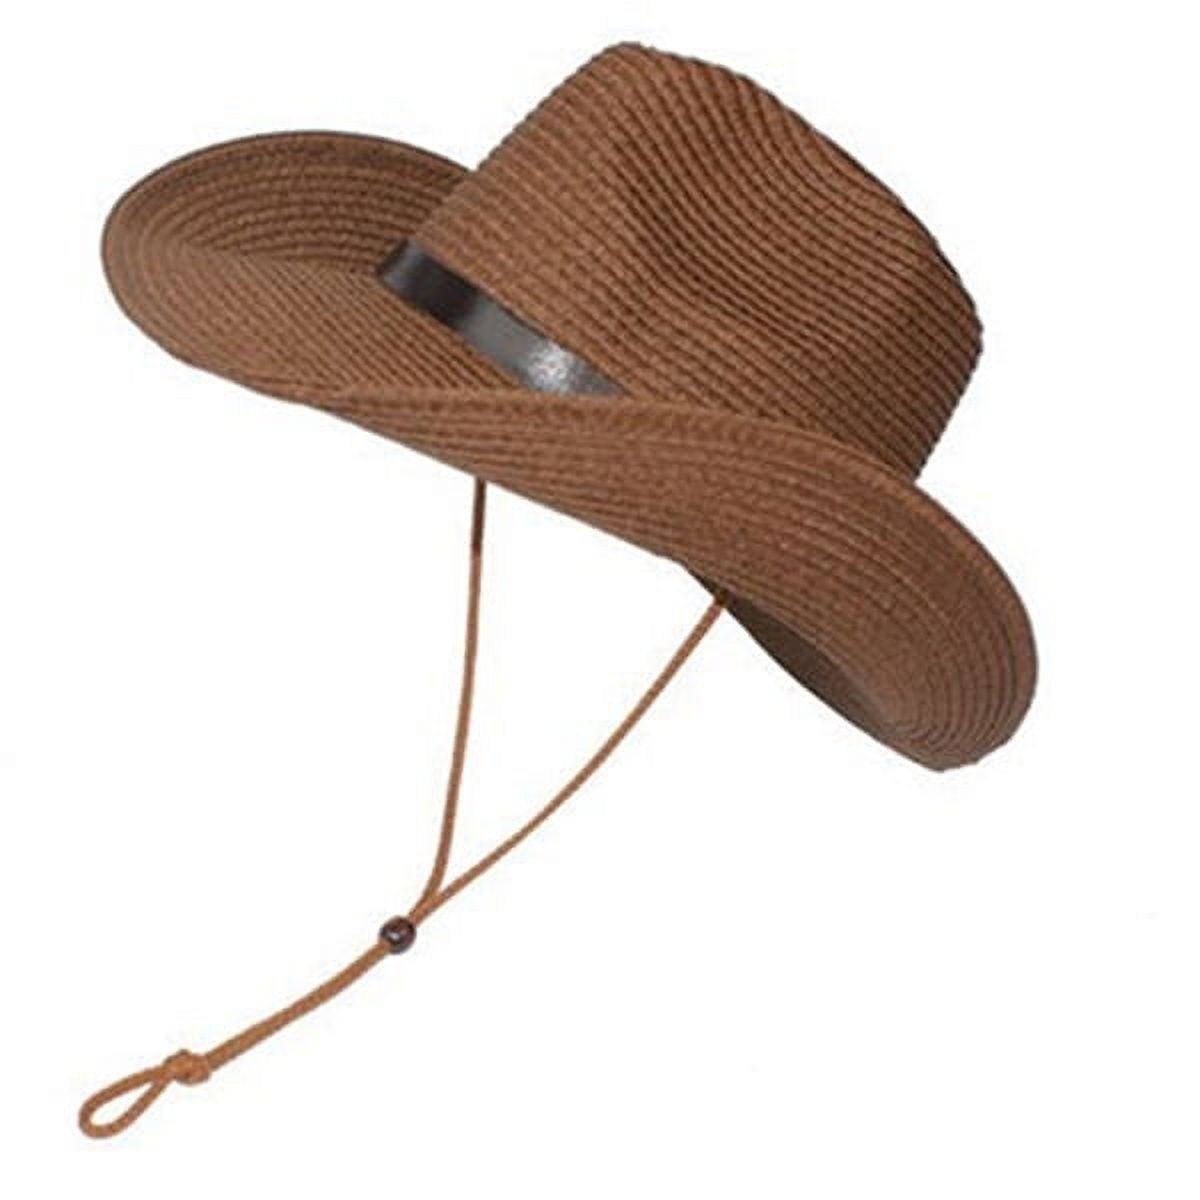 Stetson Highlands Palm Straw Gambler Hat: Size: L Natural